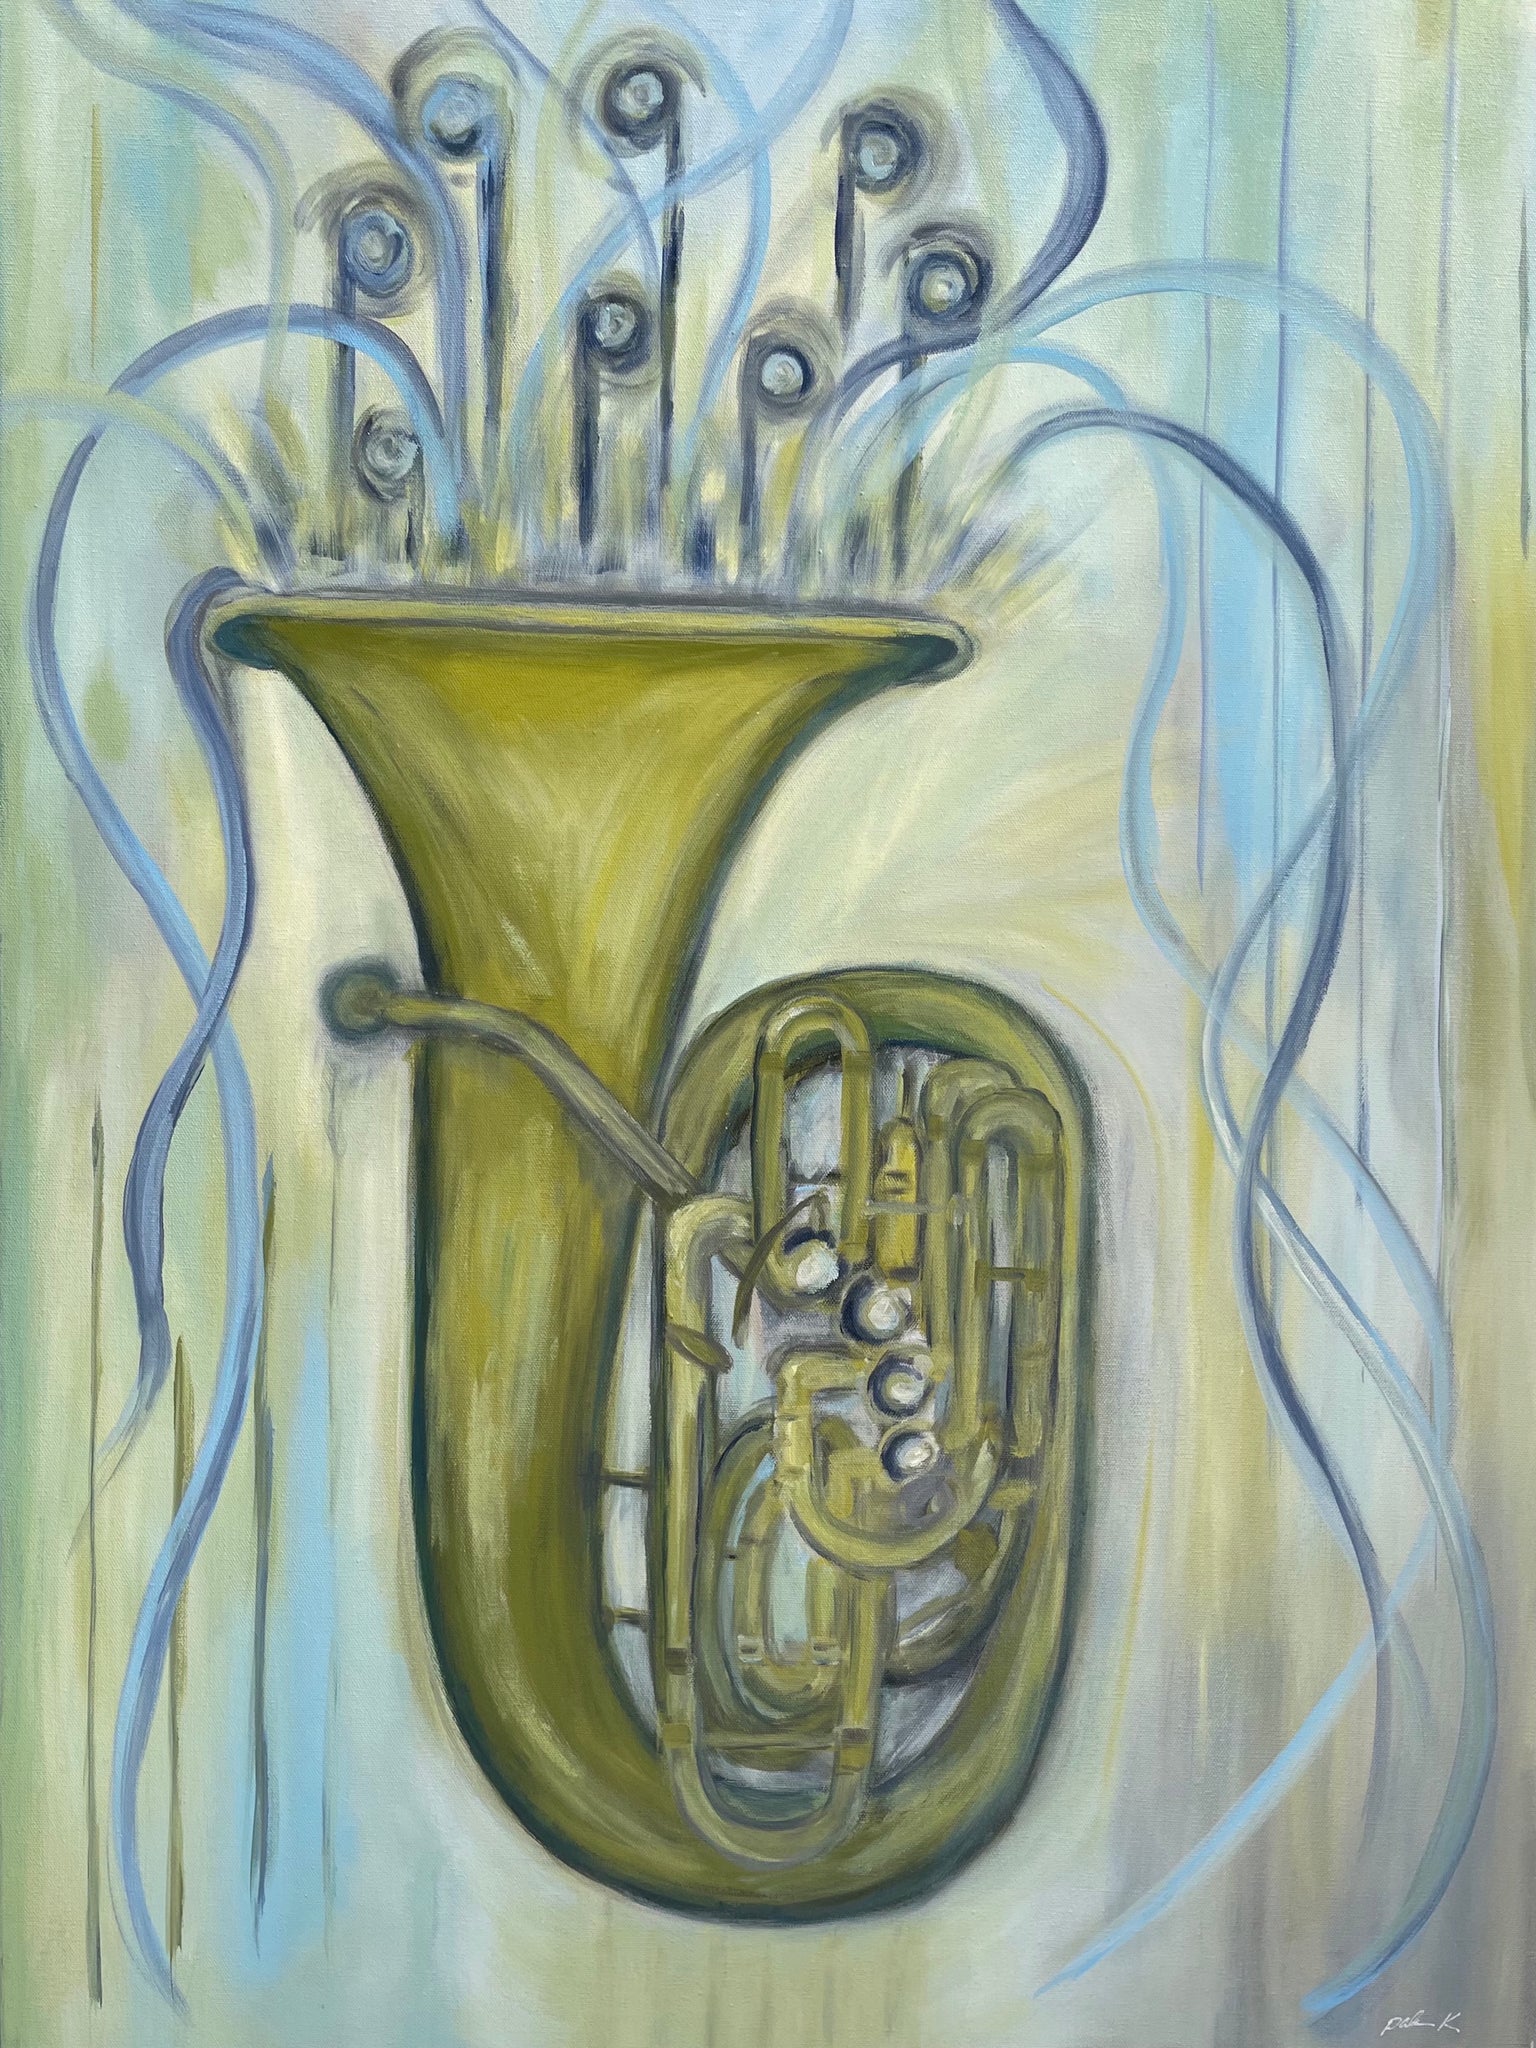 Fine Art Print - "Tuba Tuba"